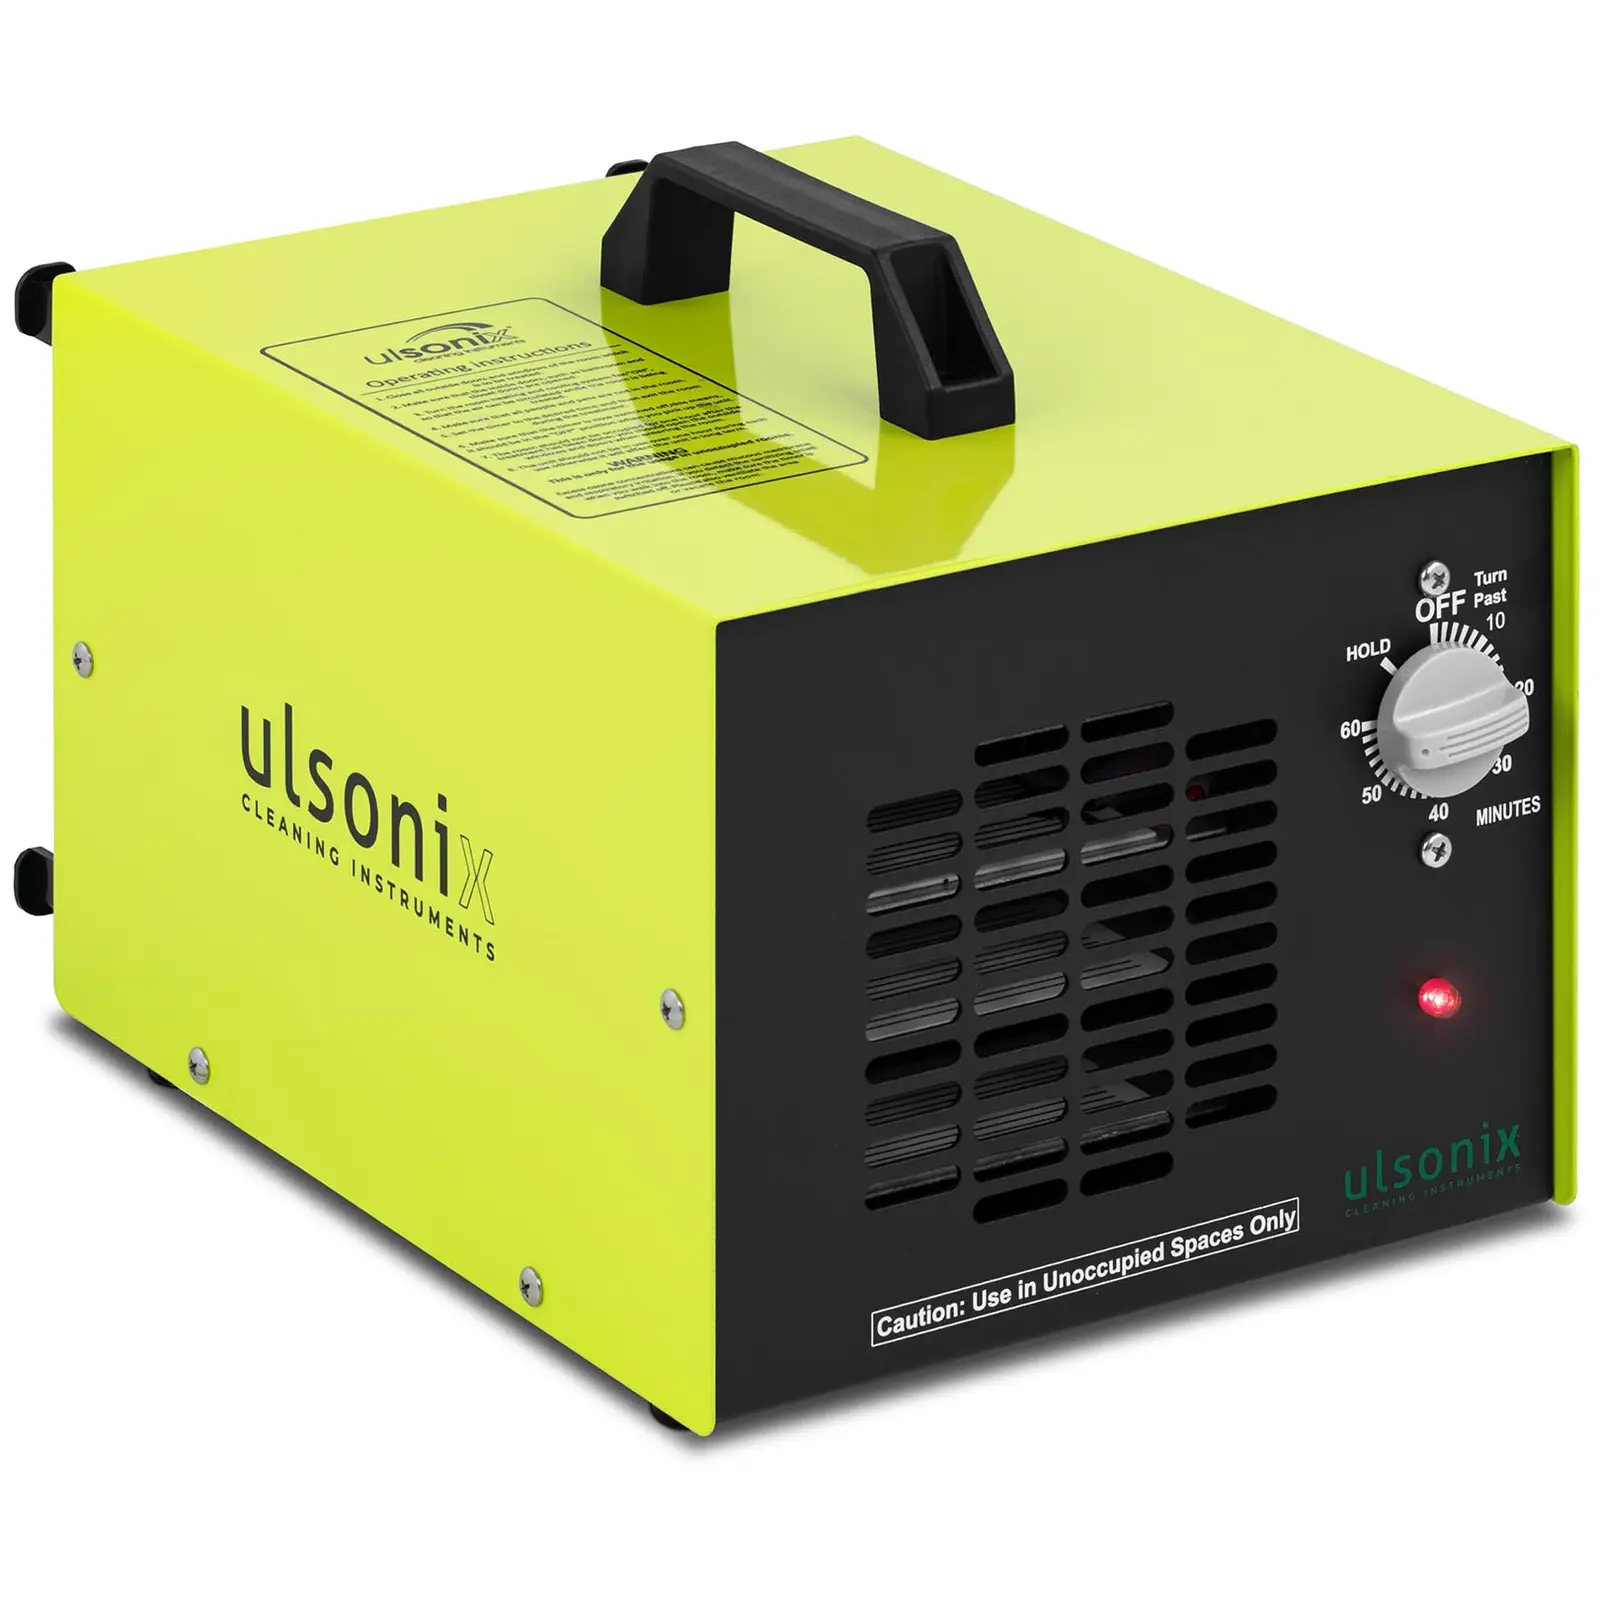 Ozonový generátor 20 000 mg/h 160 wattů - Generátory ozonu ulsonix